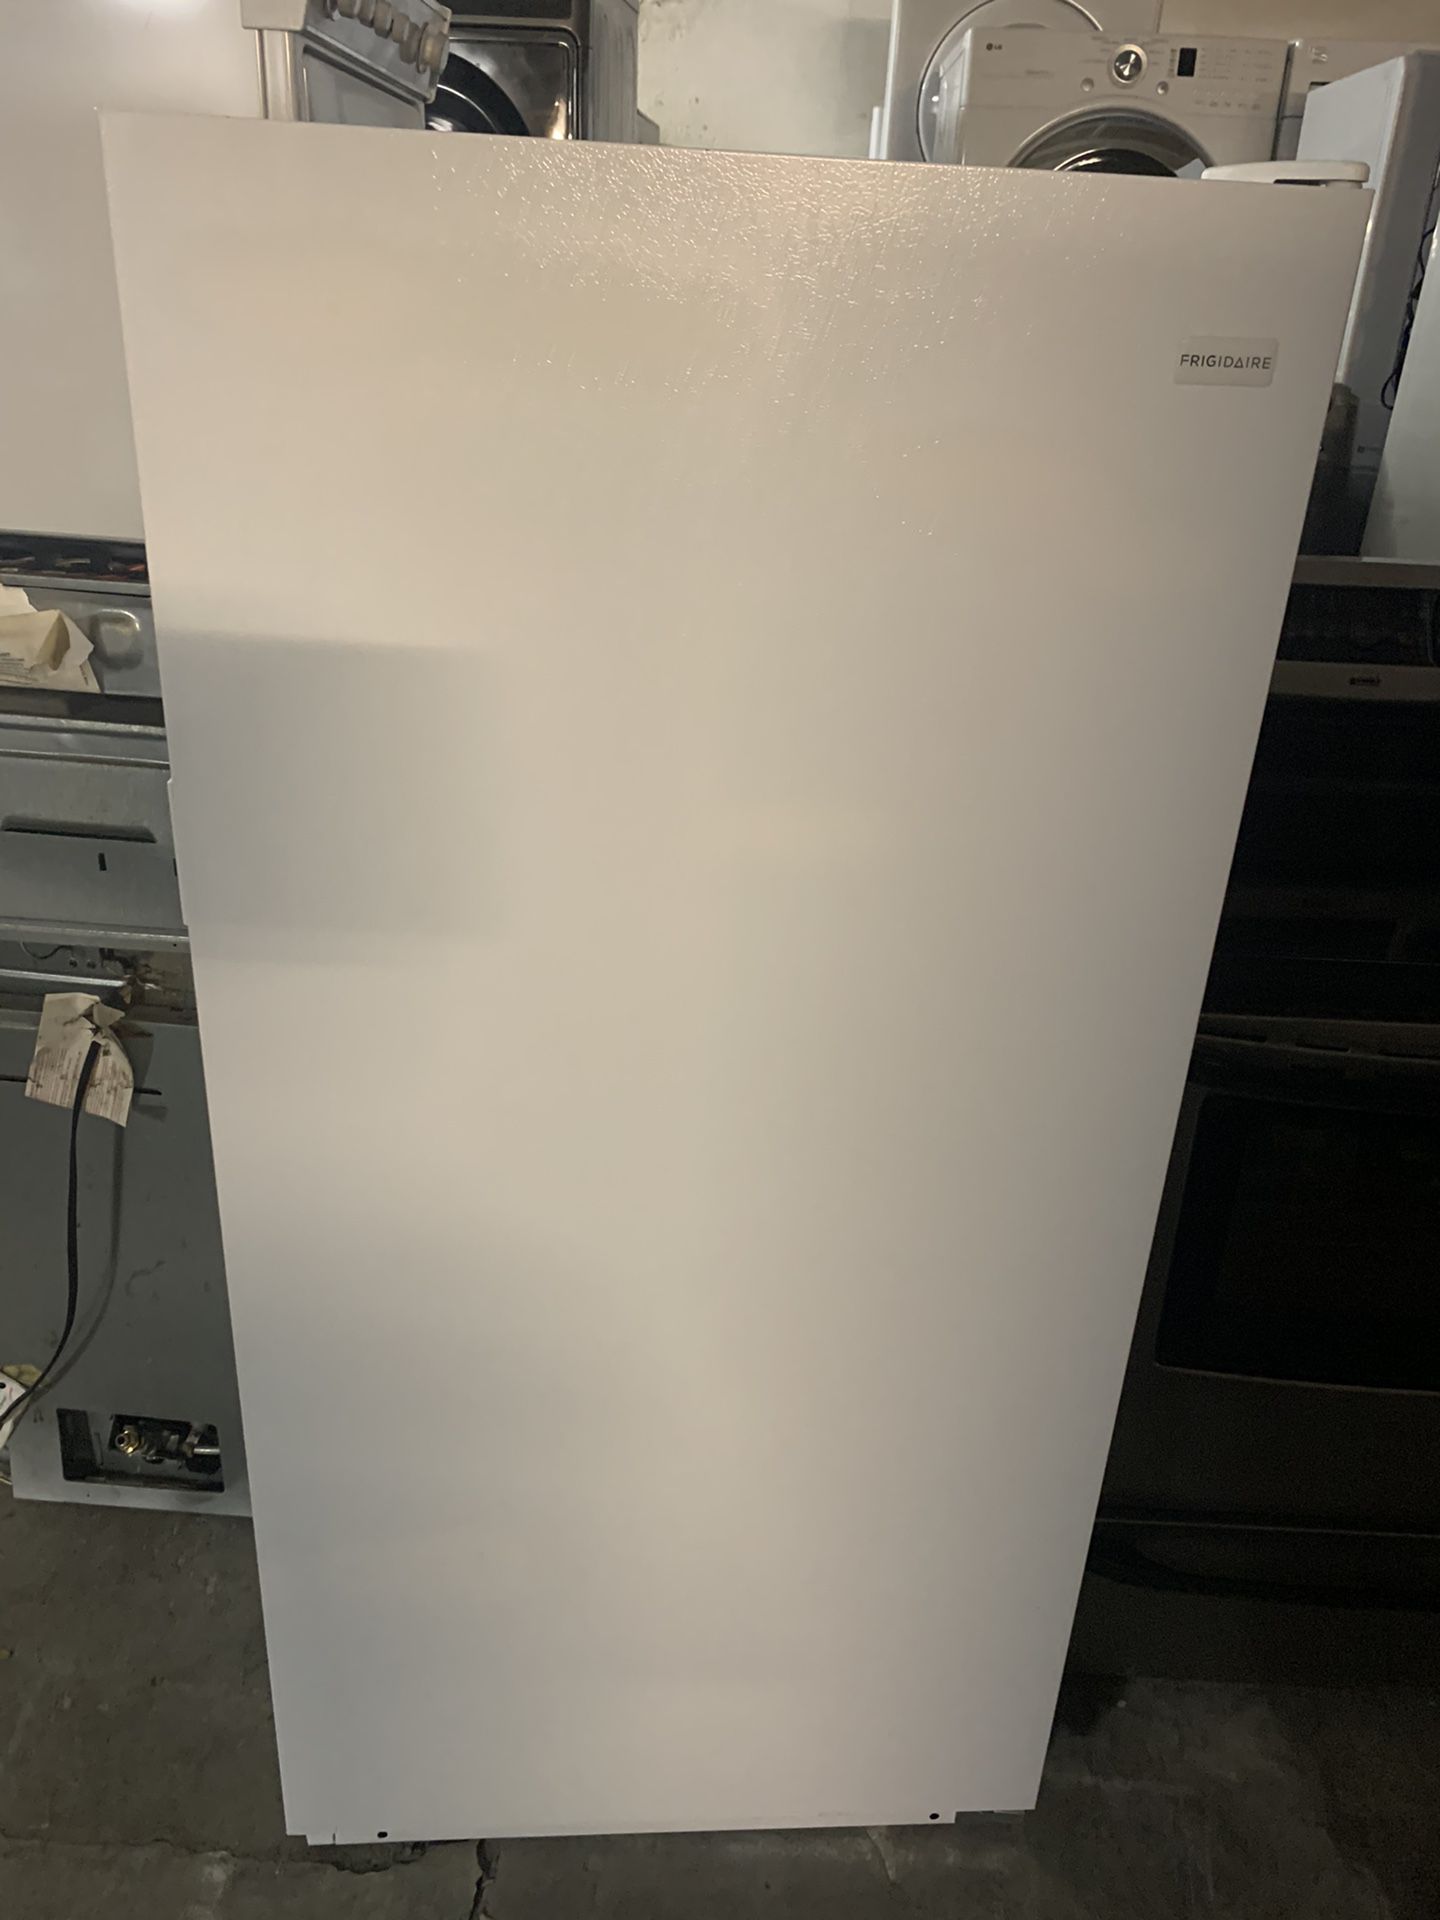 One door freezer brand Frigidaire everything is good working condition 90 days warranty